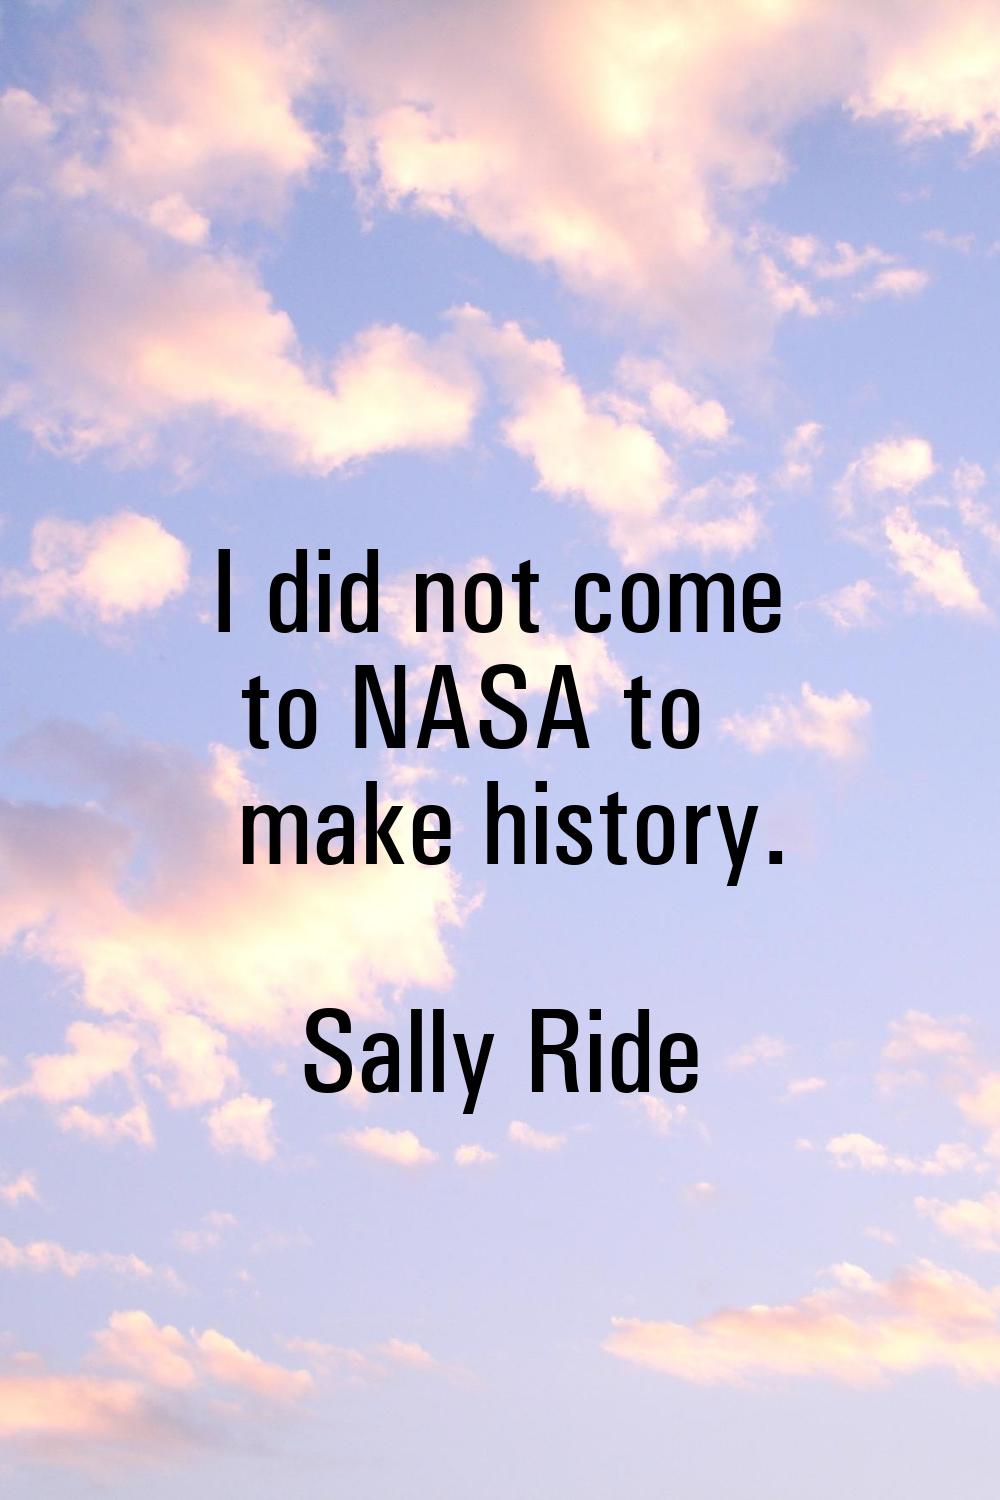 I did not come to NASA to make history.